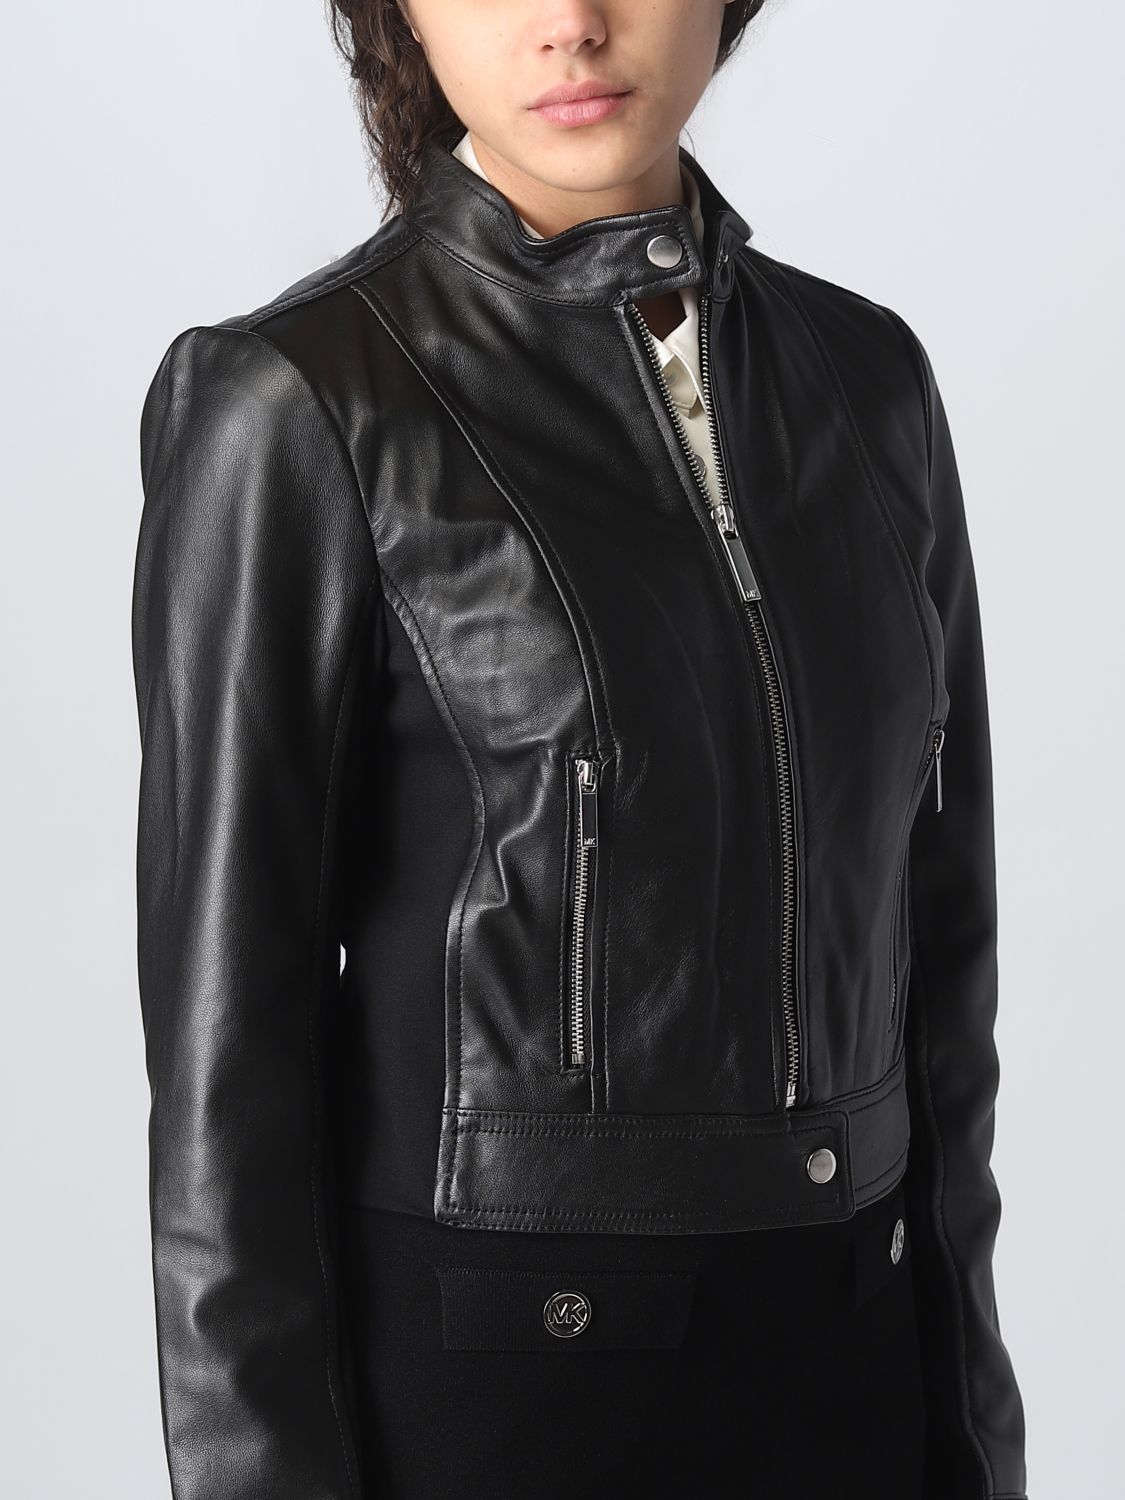 MICHAEL KORS: jacket for woman - Black | Michael Kors jacket MB92J0B8RK  online on 